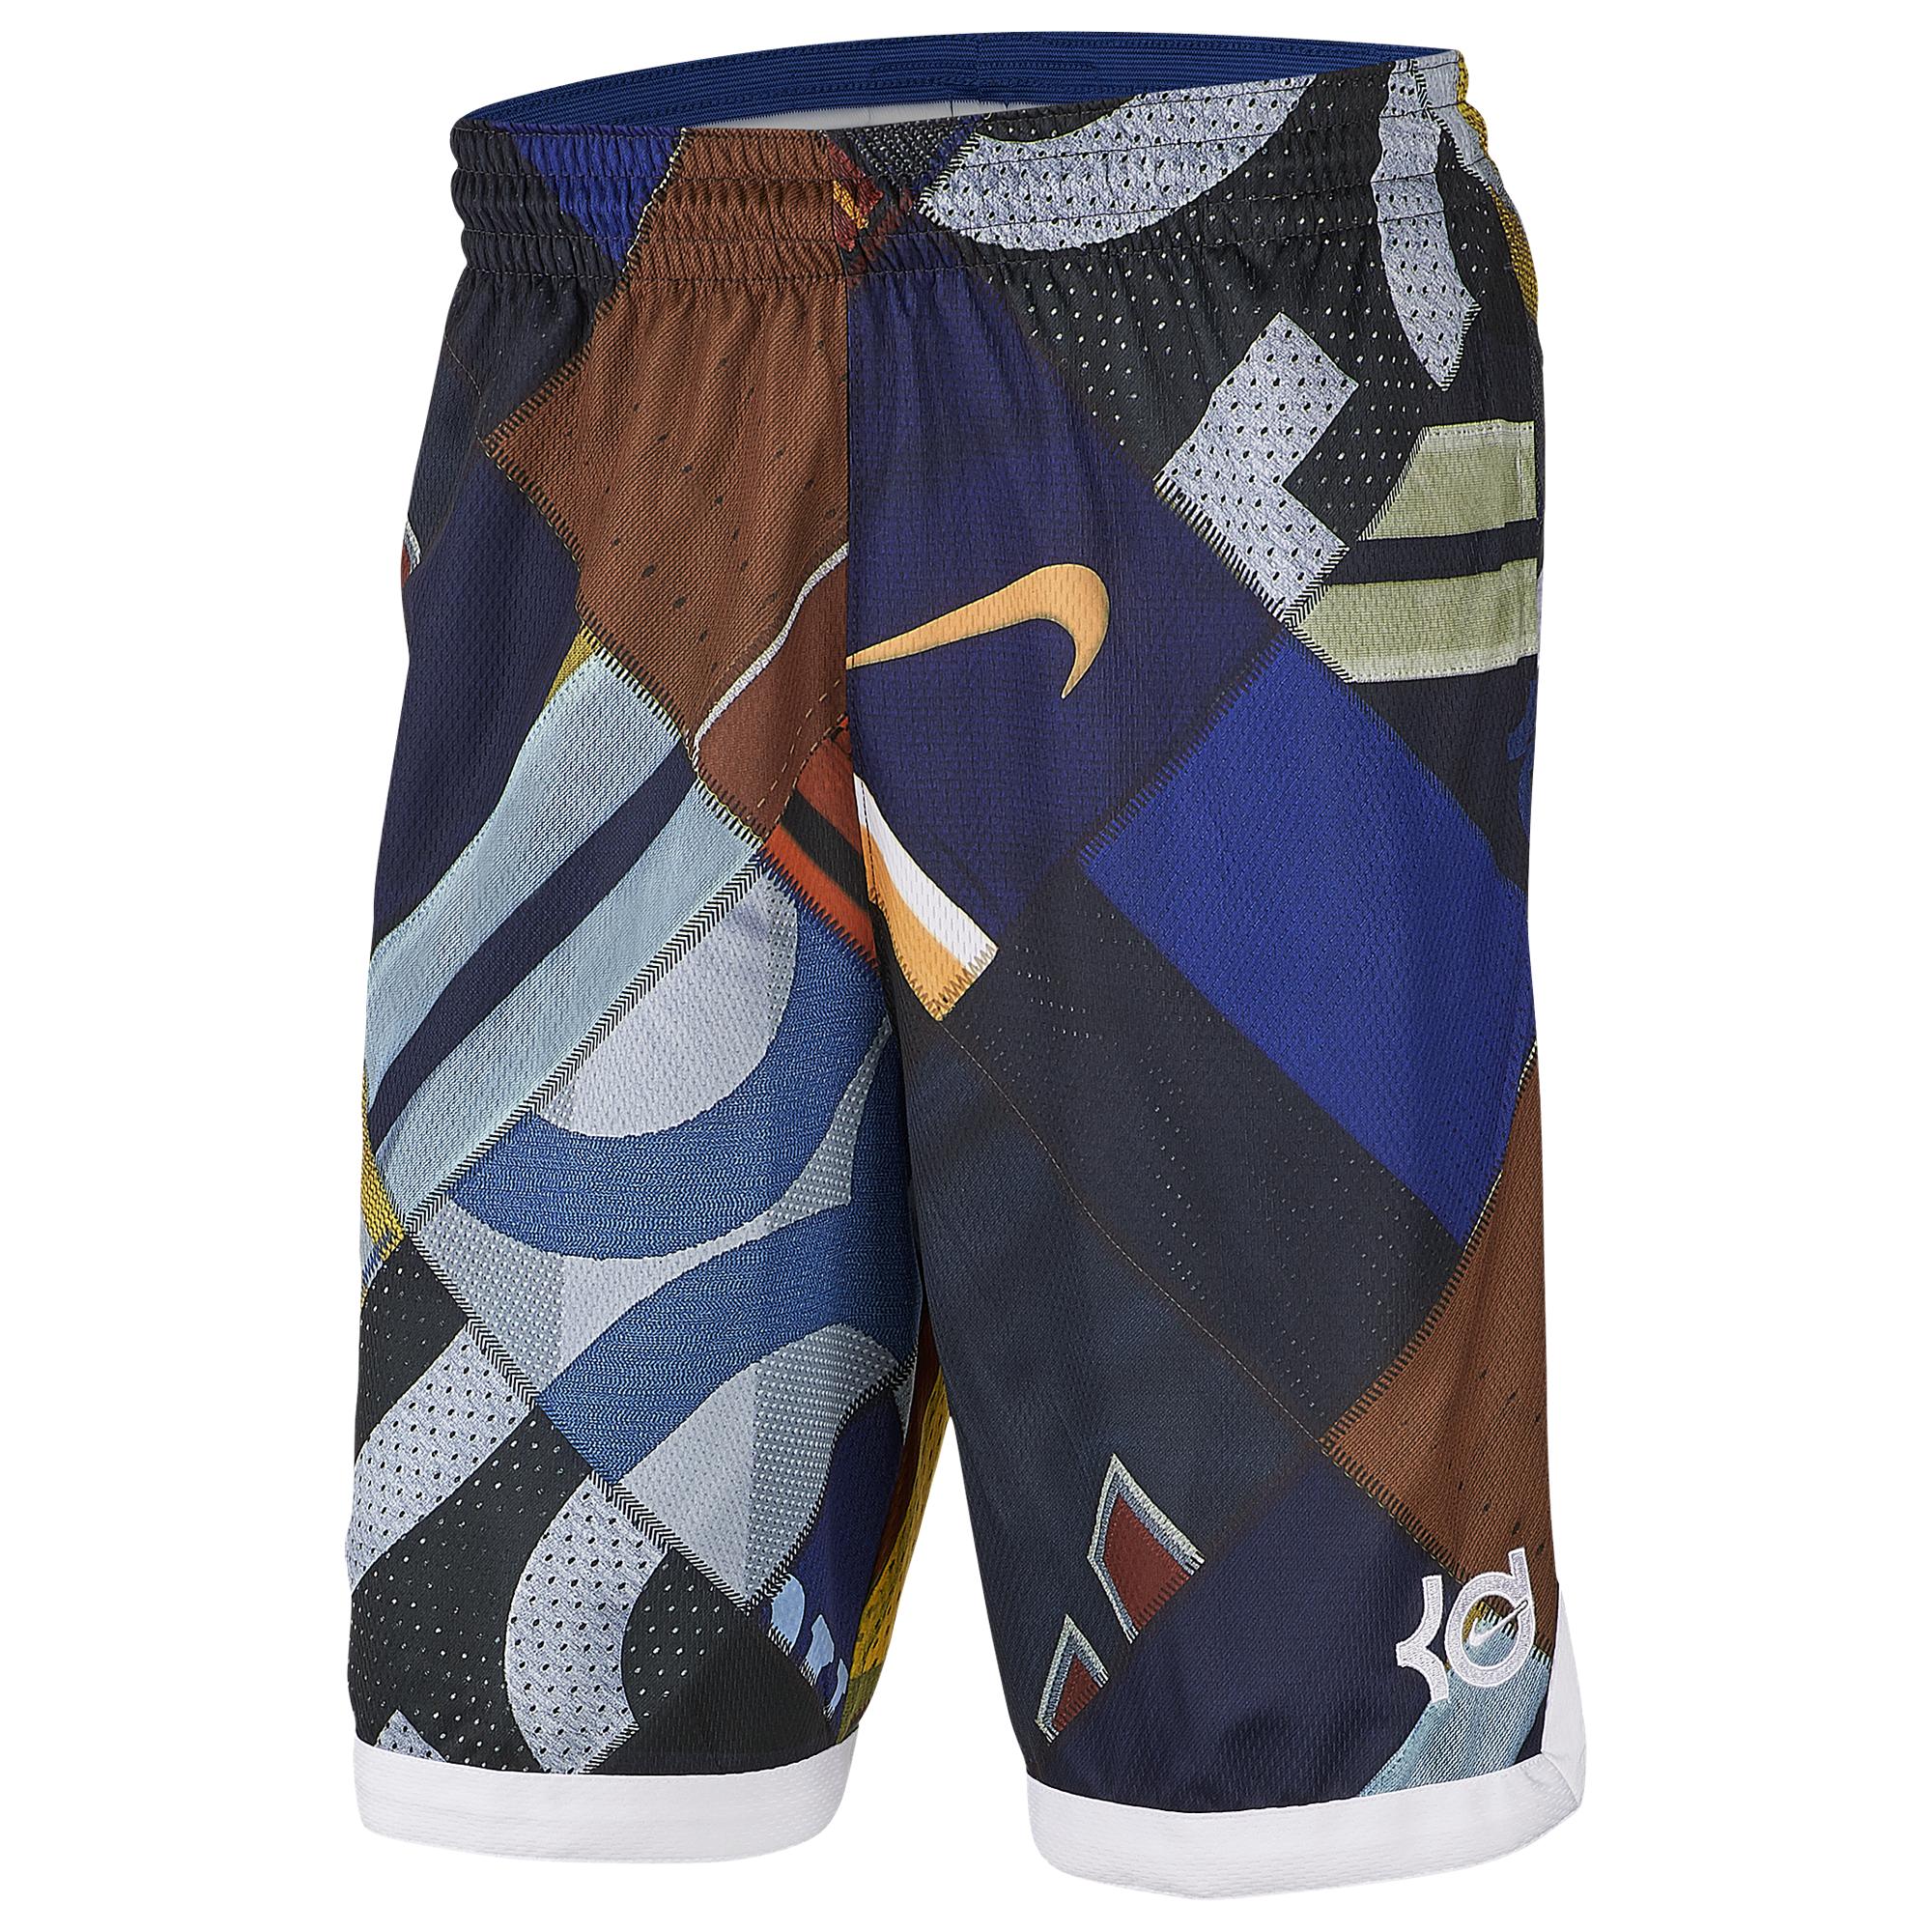 Nike Synthetic Kd Elite Shorts in Blue for Men - Lyst